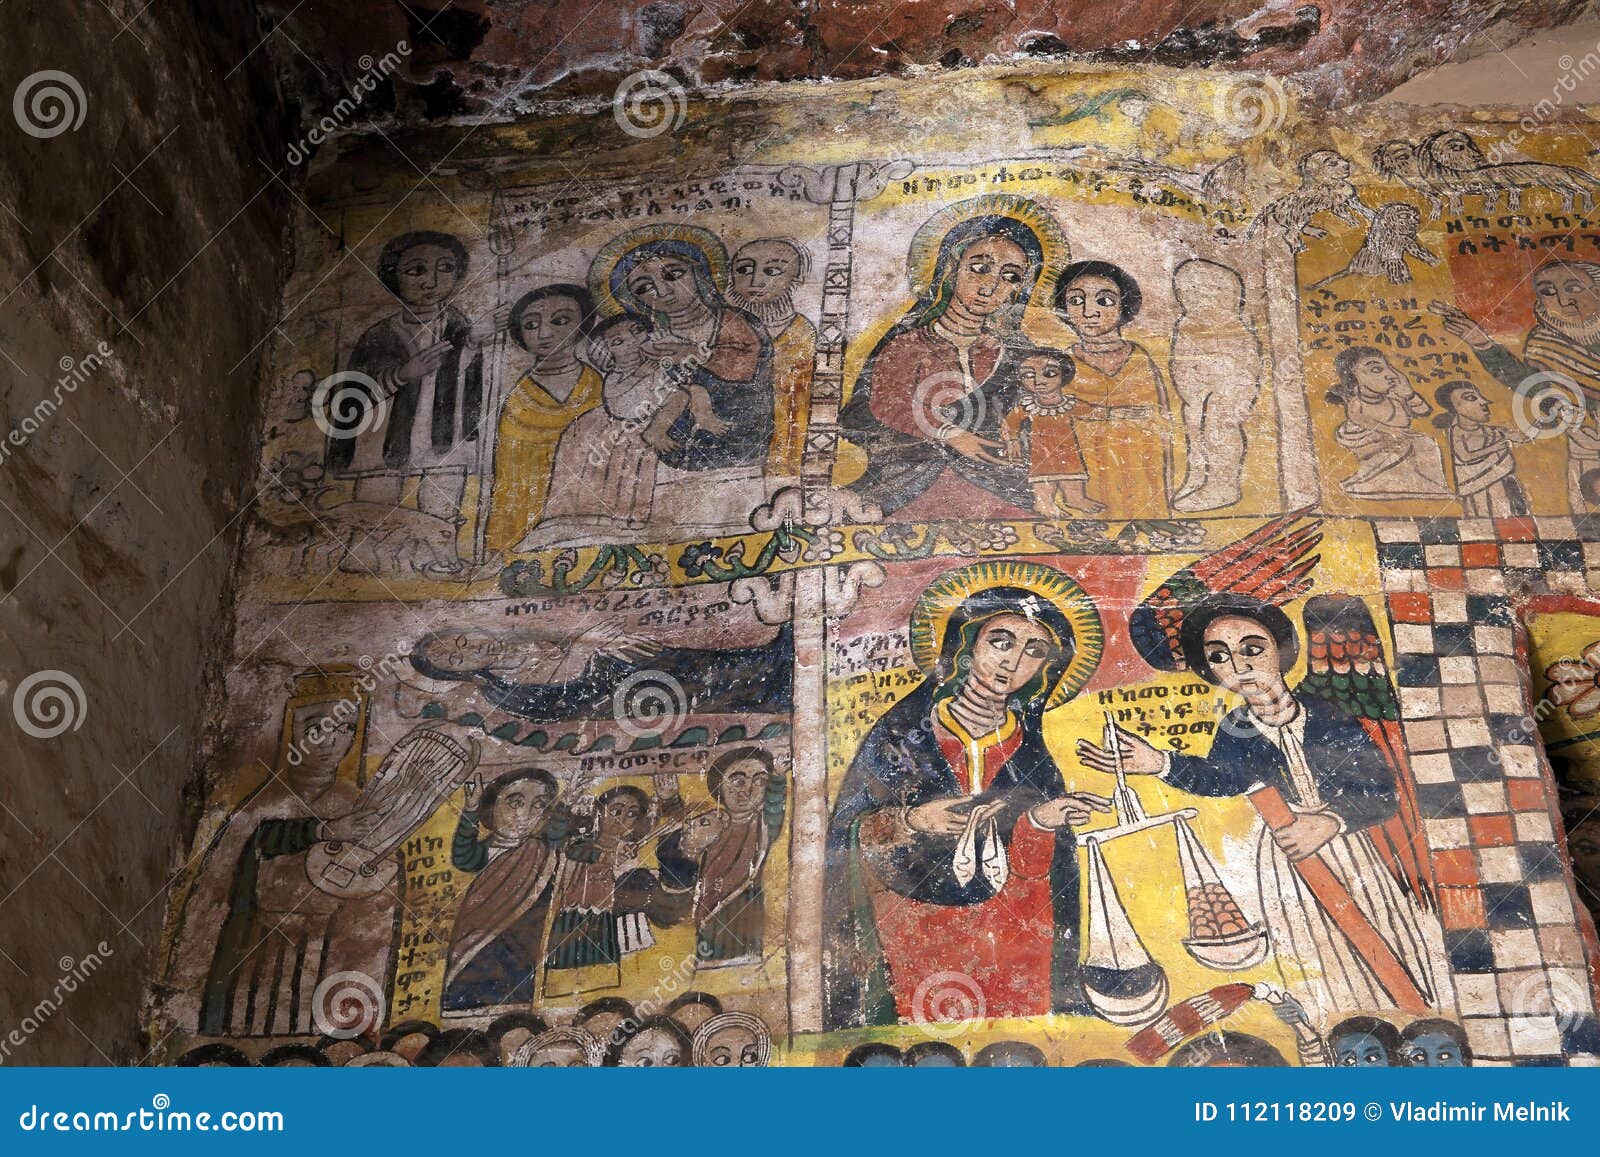 iconographic scenes in abreha atsbeha church in ethiopia